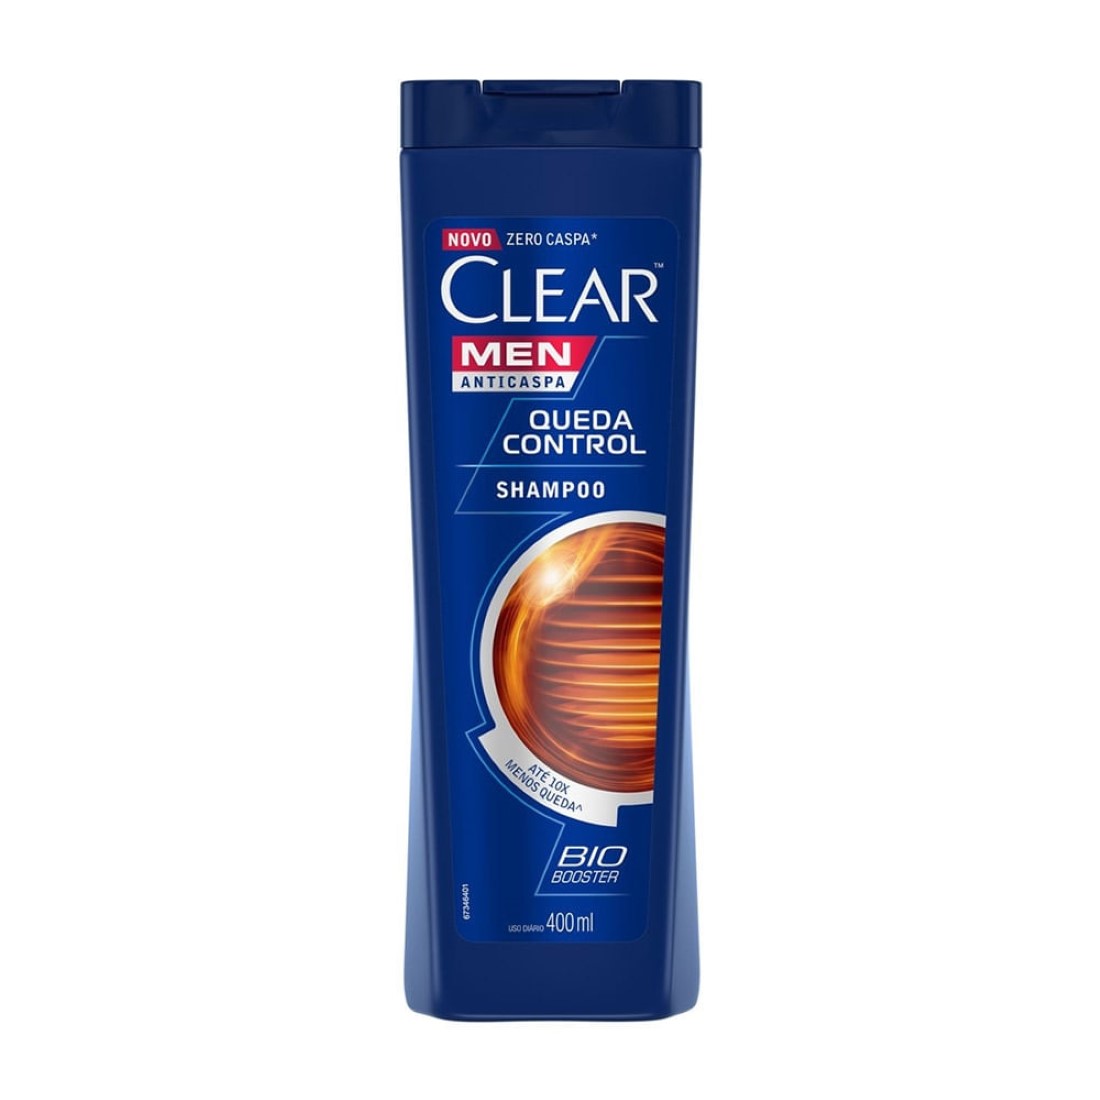 Shampoo Men Anticaspa Queda Control 400ml - Clear